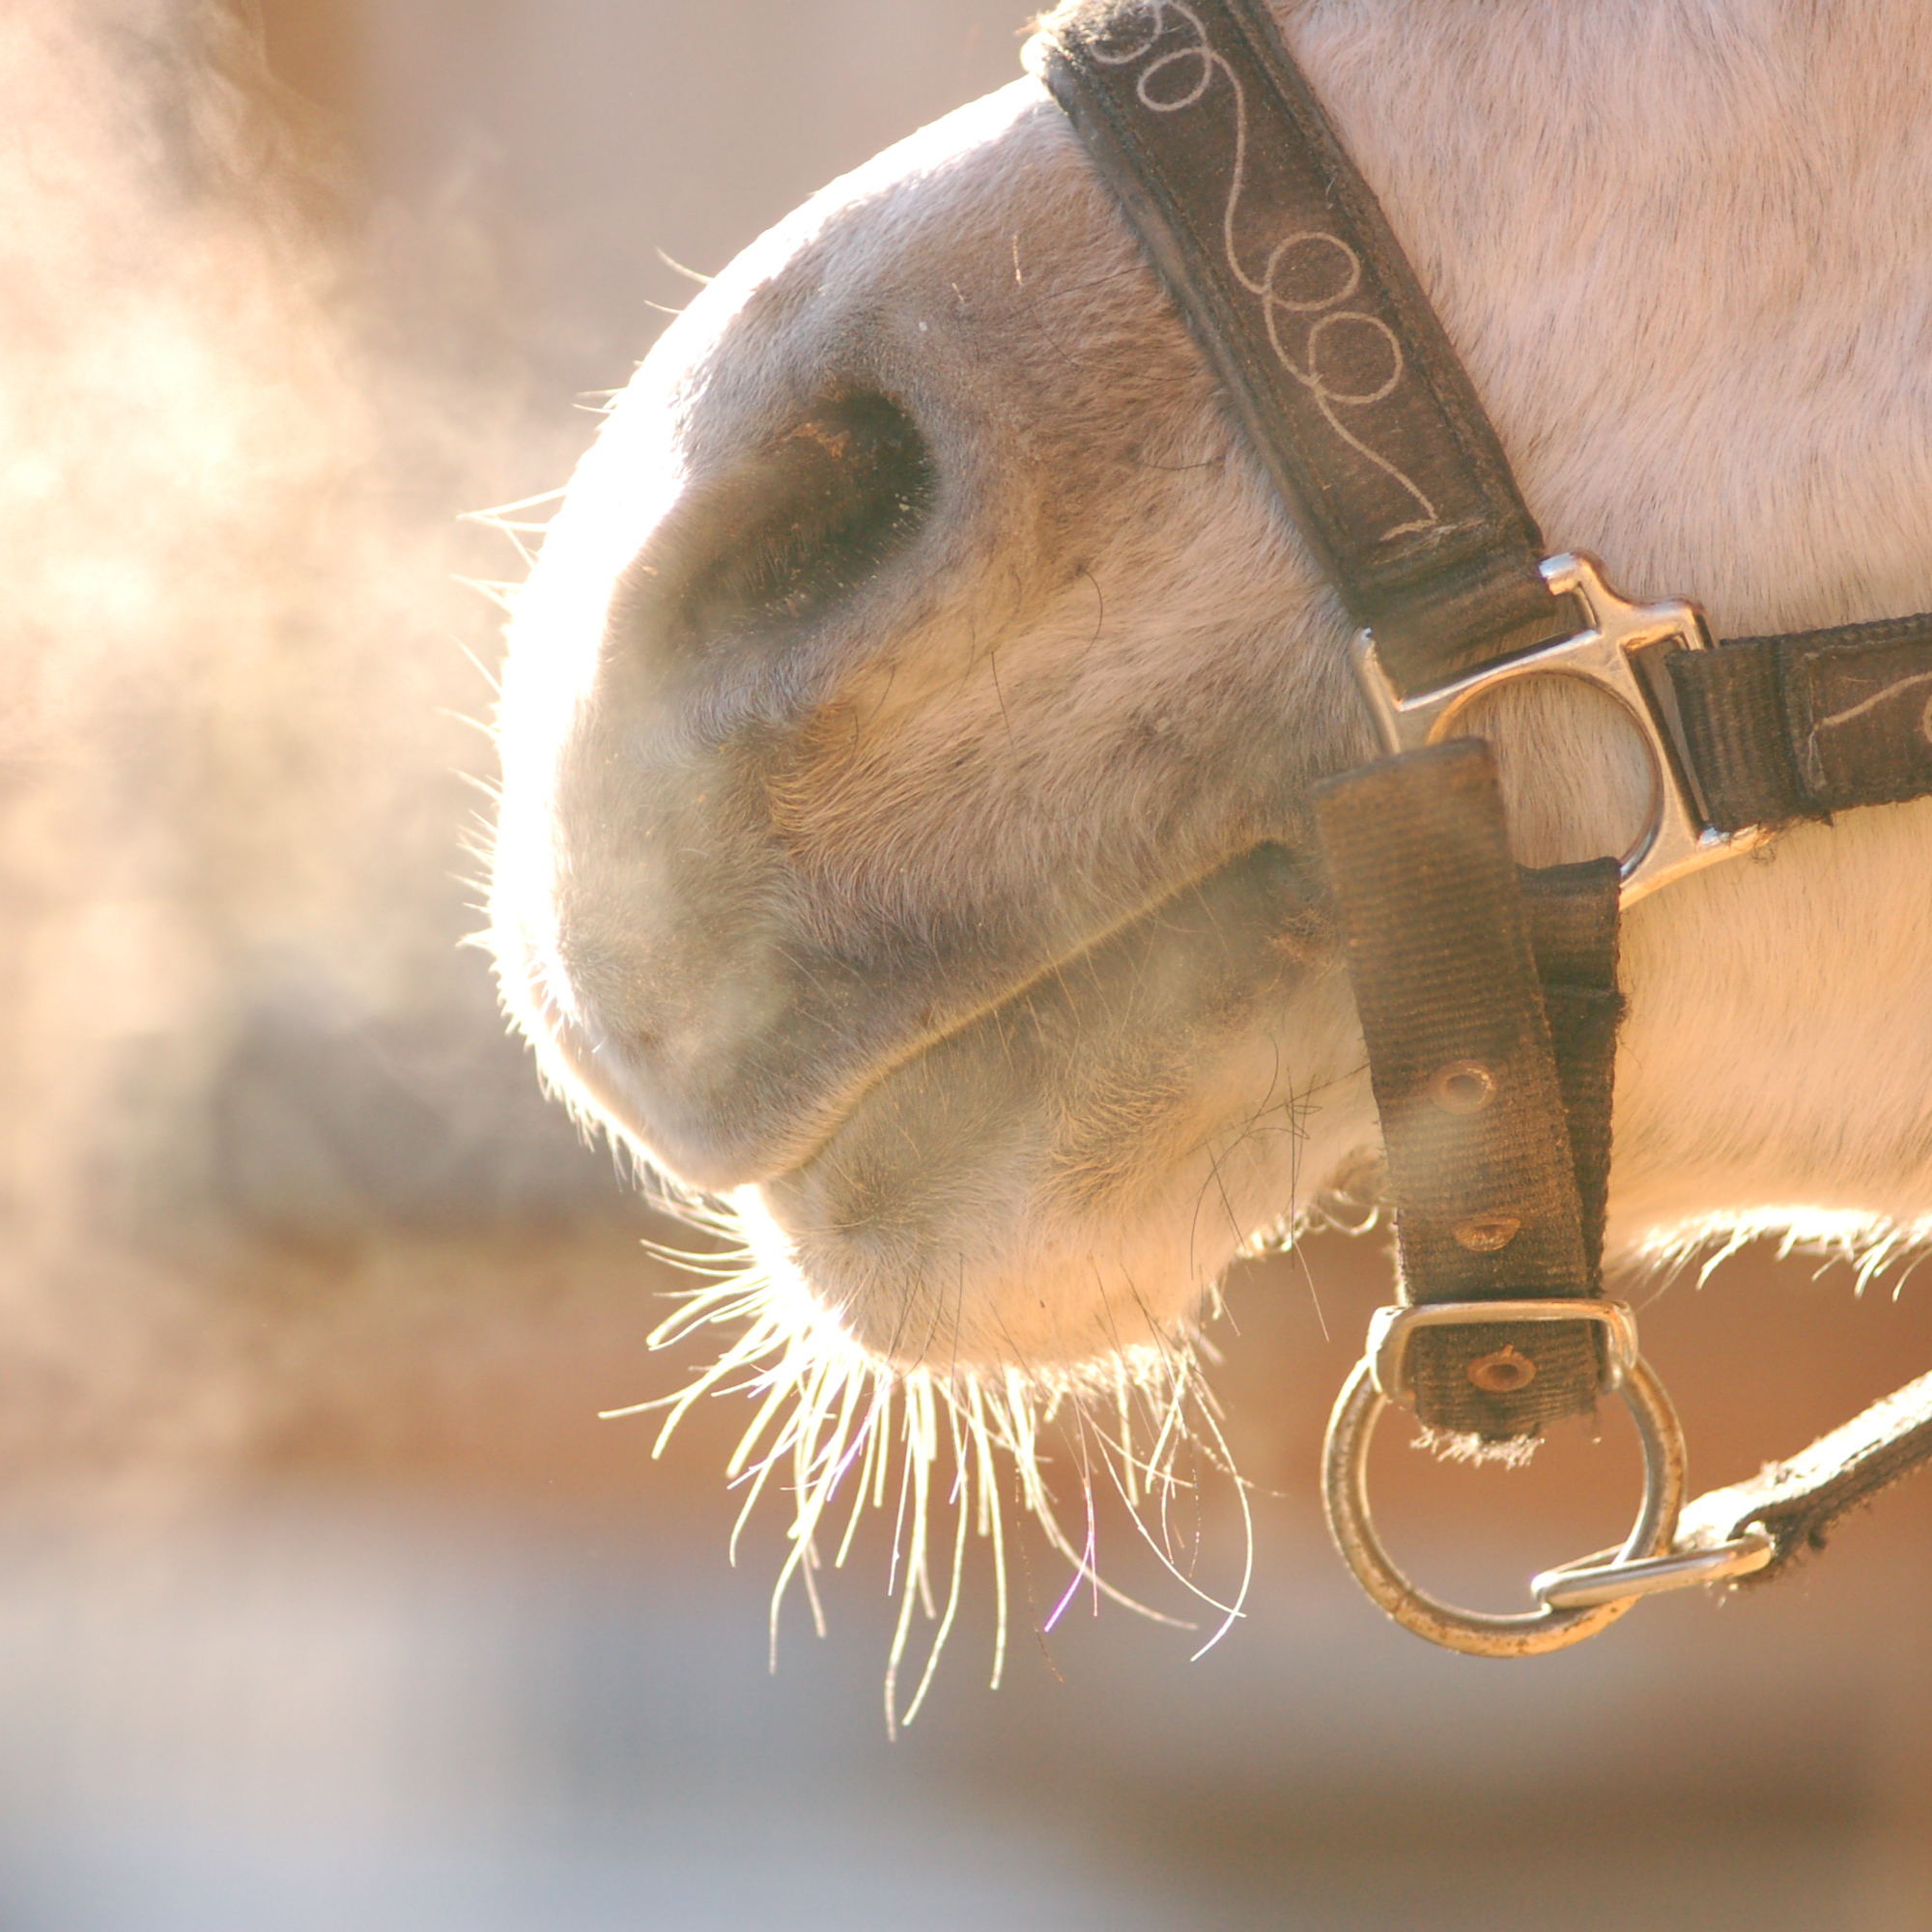 Horses can’t breathe through their mouth